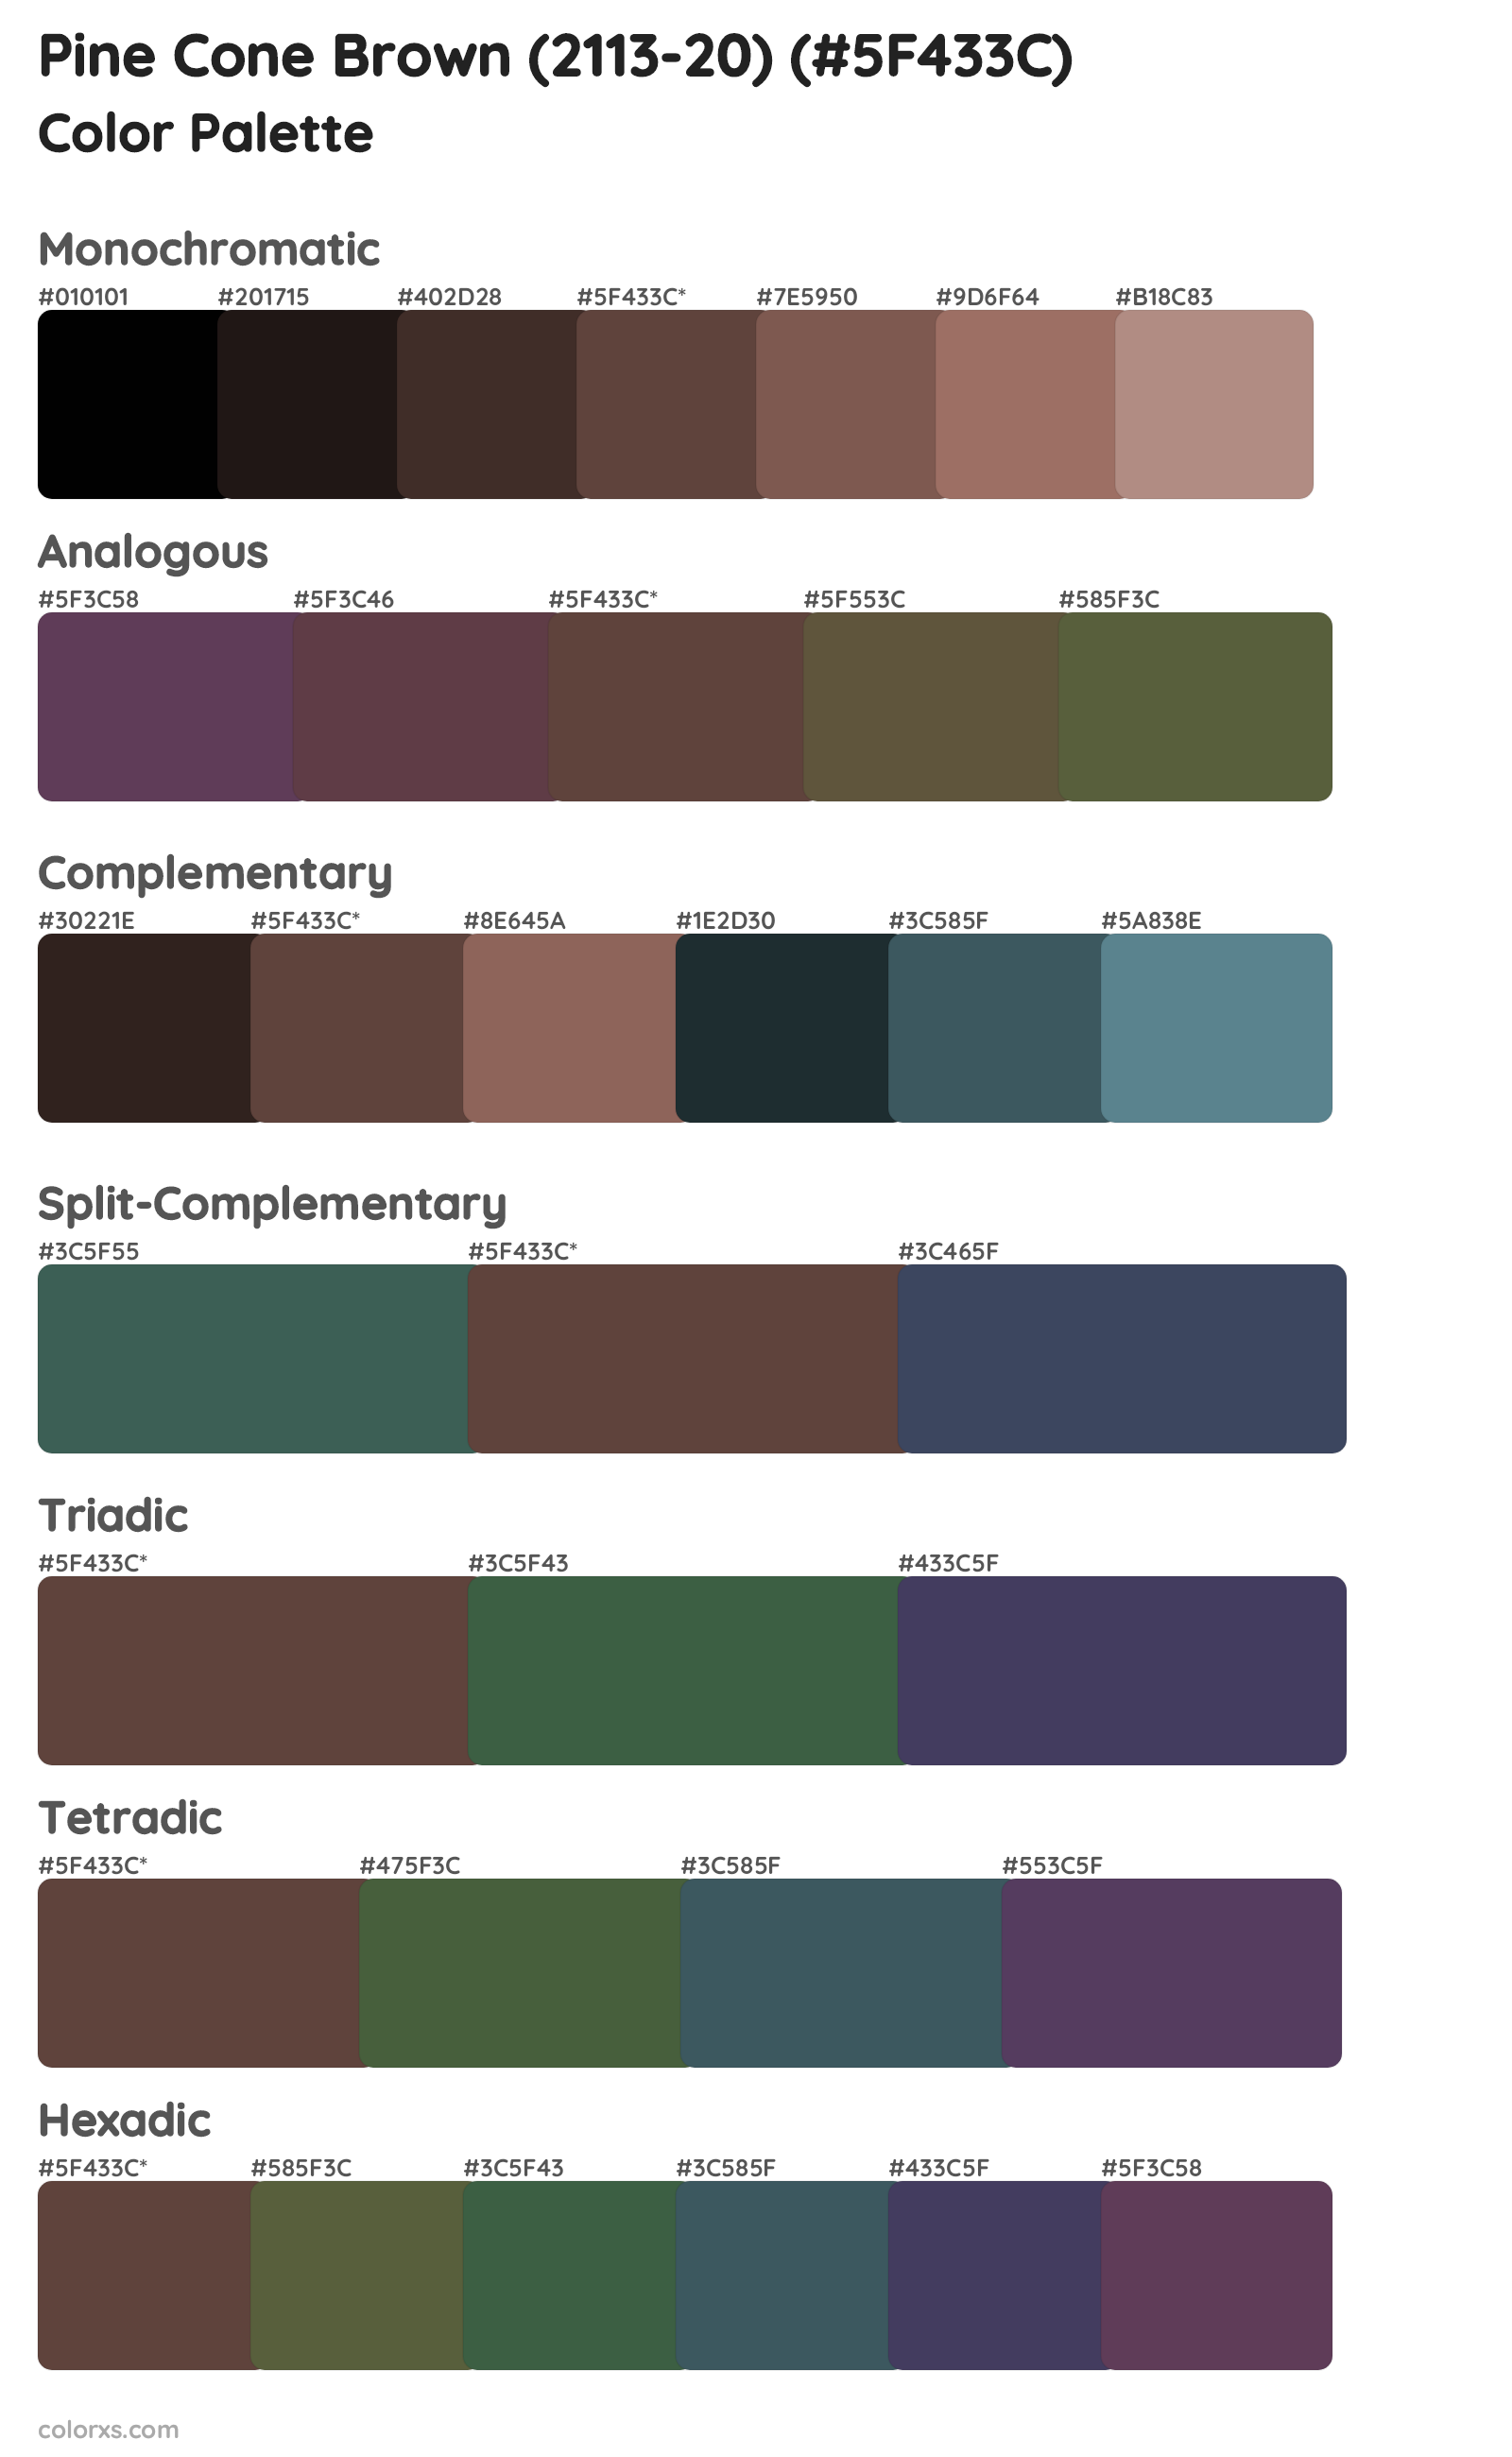 Pine Cone Brown (2113-20) Color Scheme Palettes